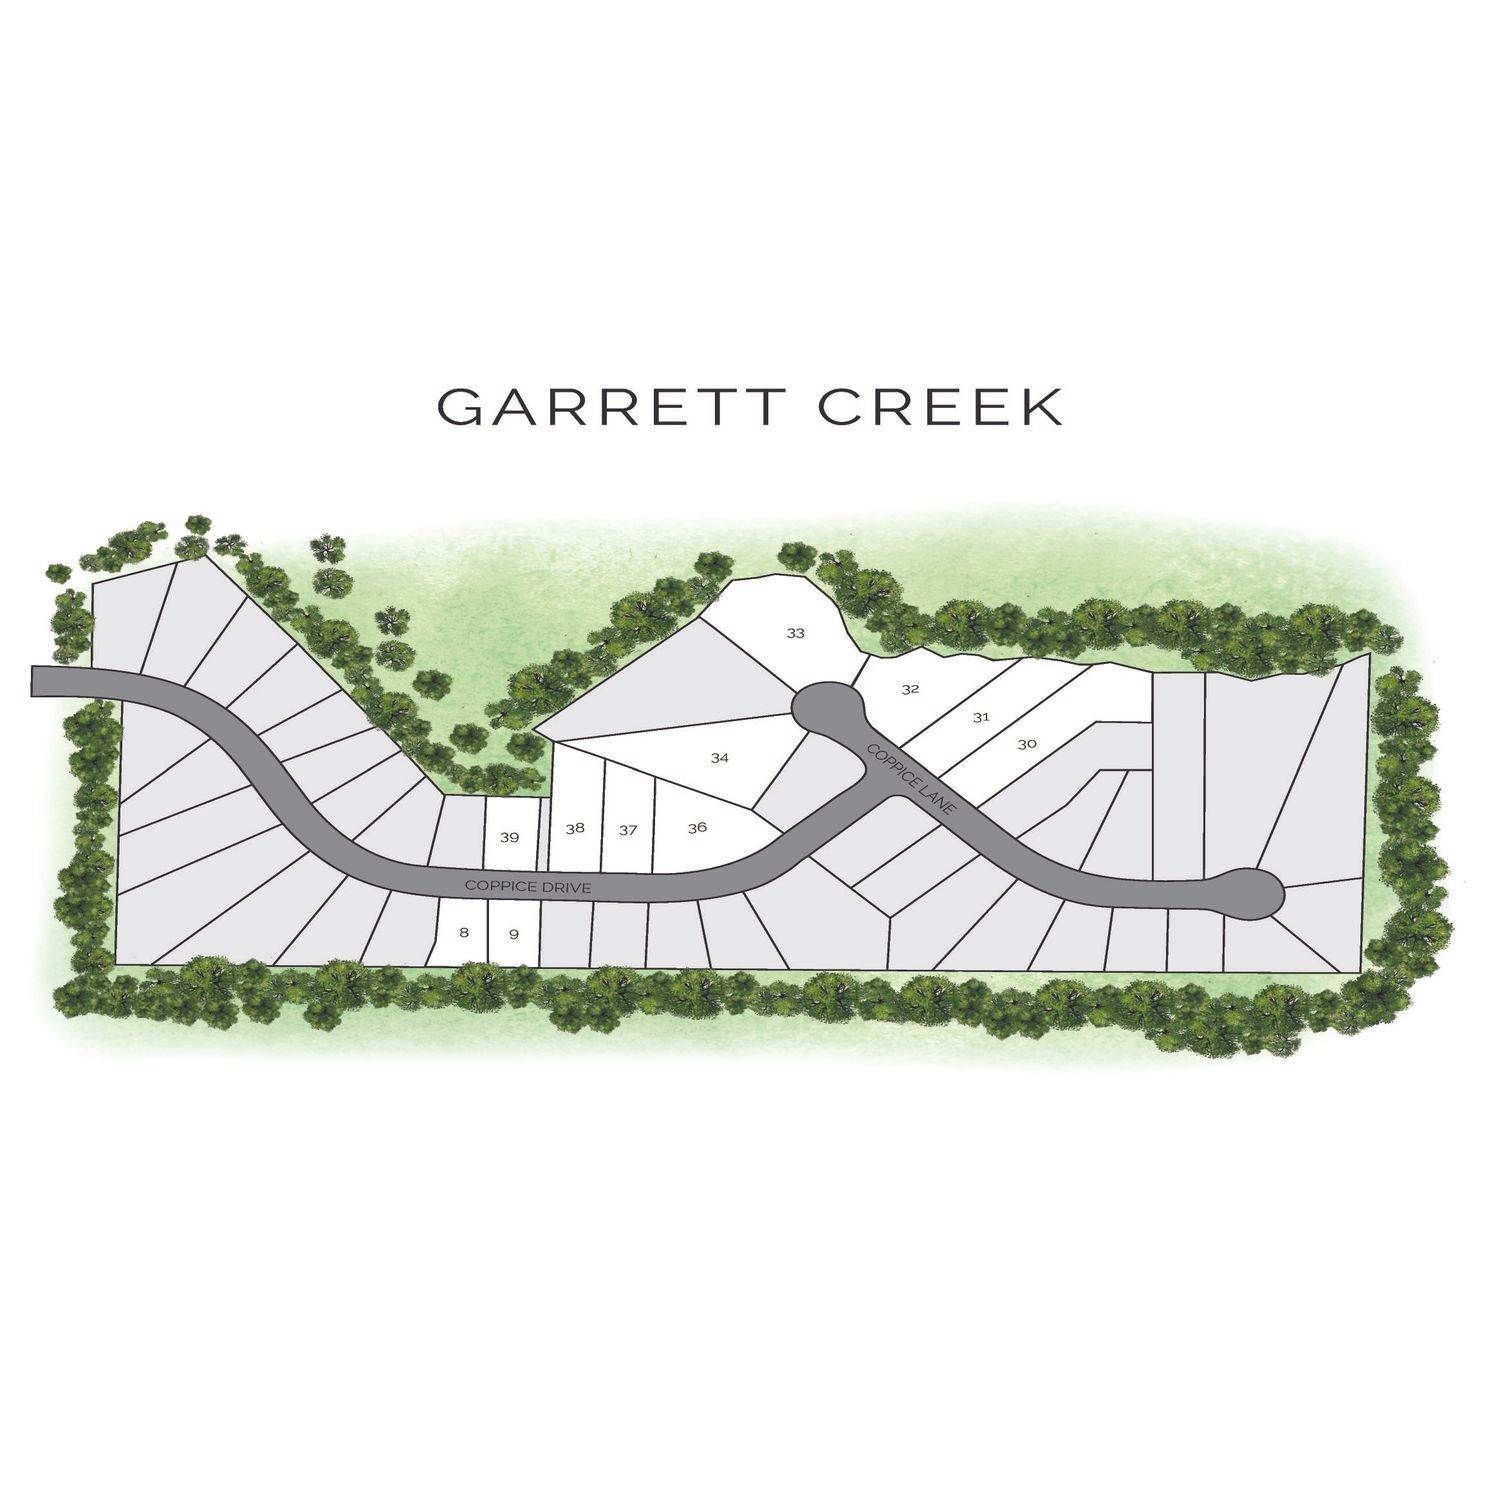 Garrett Creek Lakes building at 9901 Long Leaf Pine Dr, Midland, GA 31820